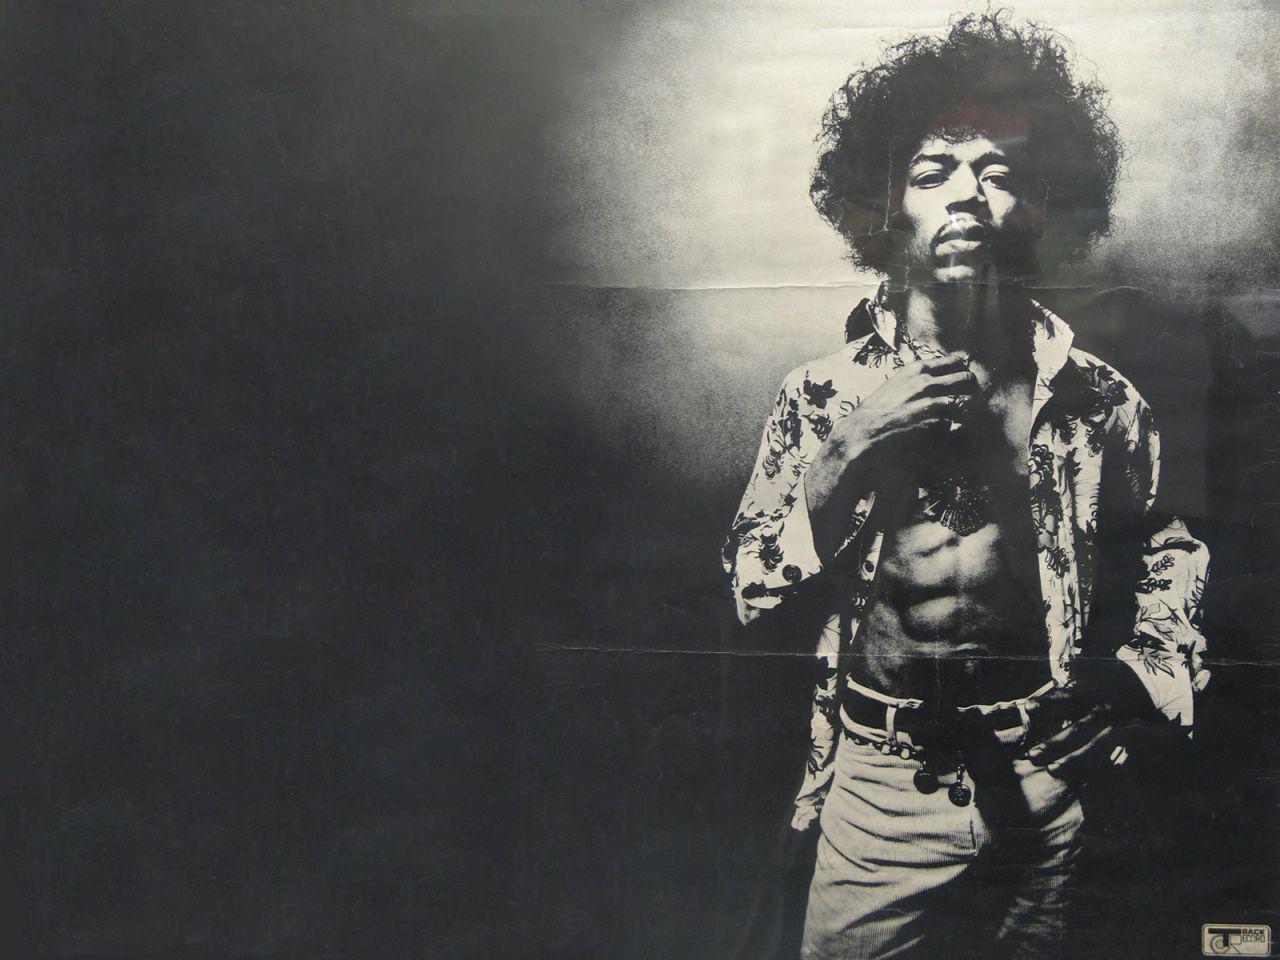 Download Papyleblues Jimi Hendrix Wallpaper 1280x960. Full HD